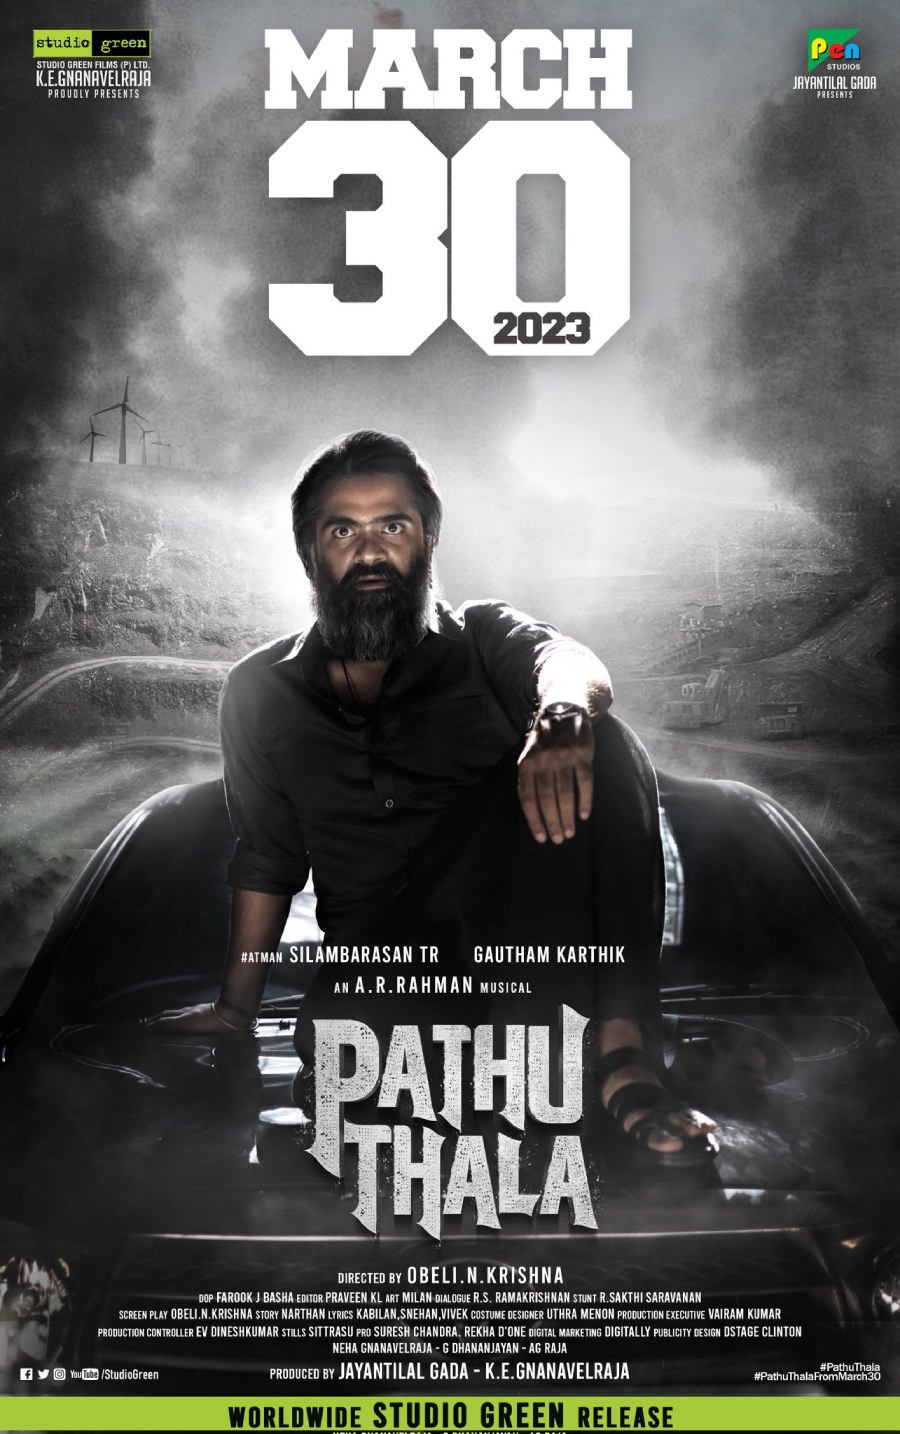 Pathu Thala release date